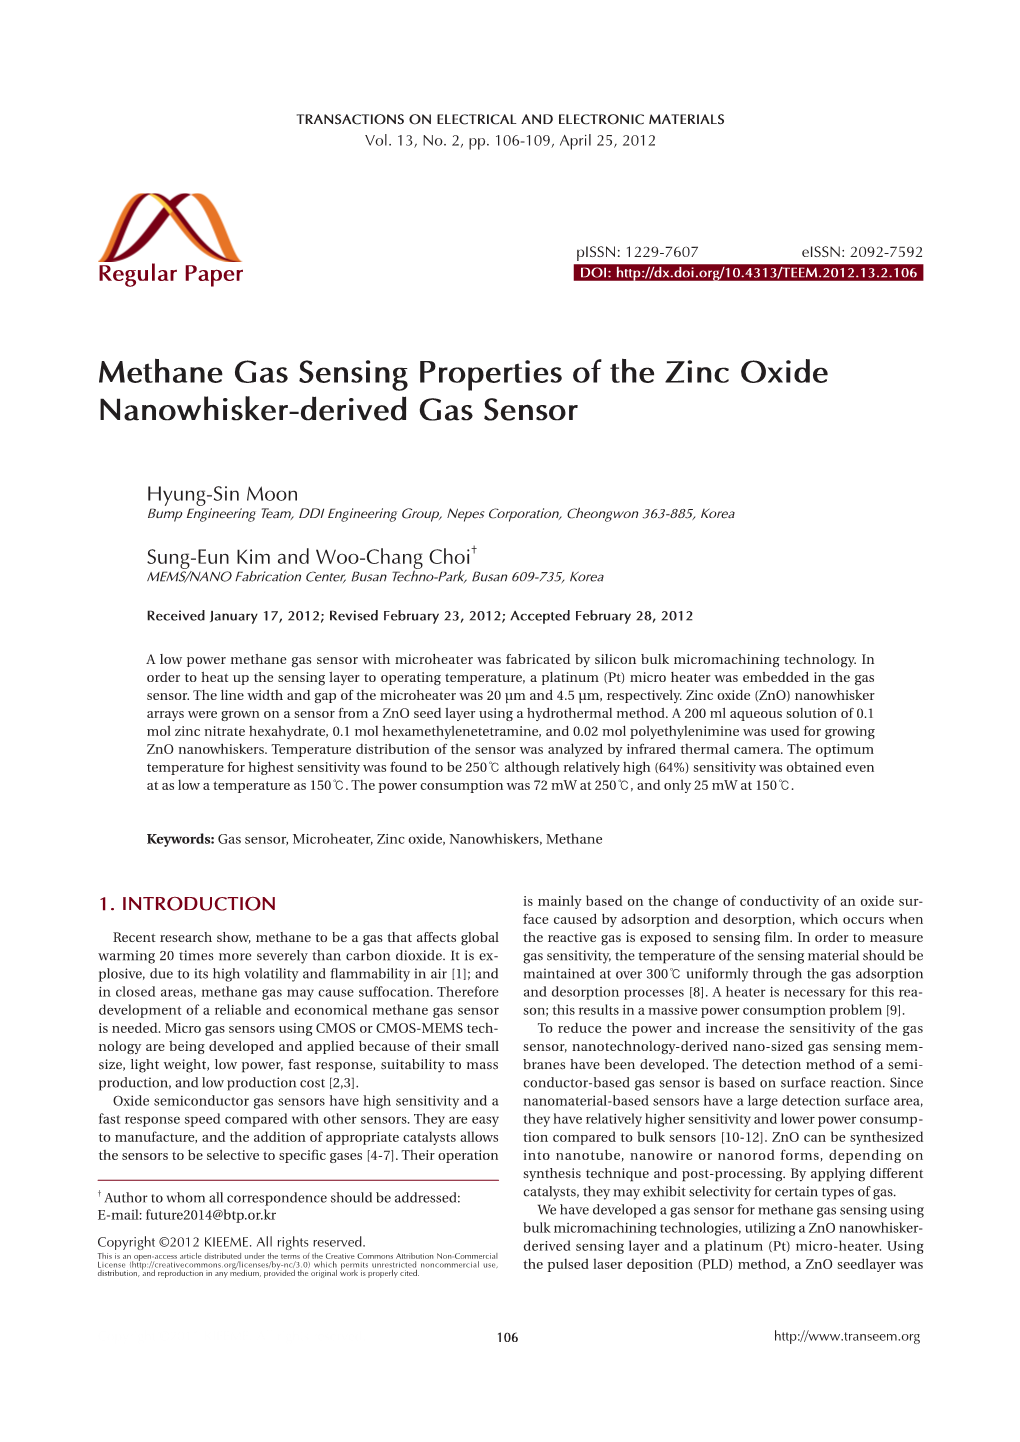 Methane Gas Sensing Properties of the Zinc Oxide Nanowhisker-Derived Gas Sensor